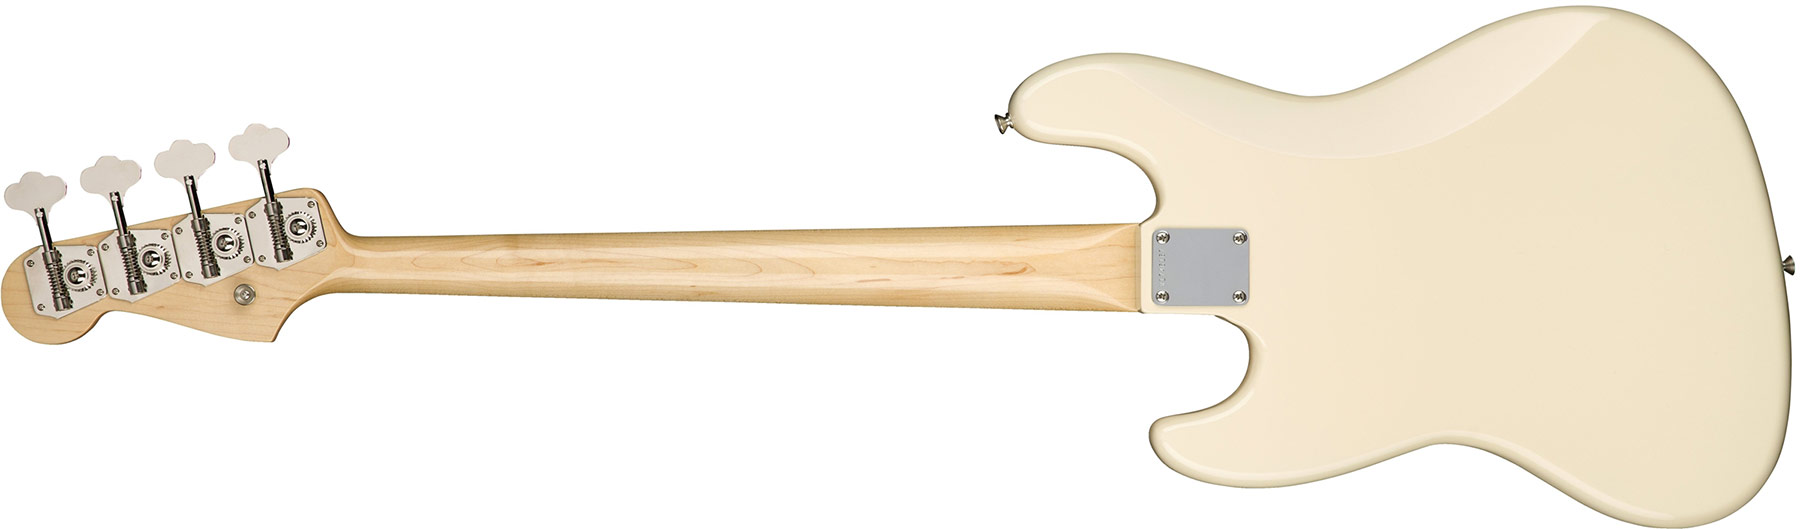 Fender Jazz Bass '60s American Original Usa Rw - Olympic White - Bajo eléctrico de cuerpo sólido - Variation 2